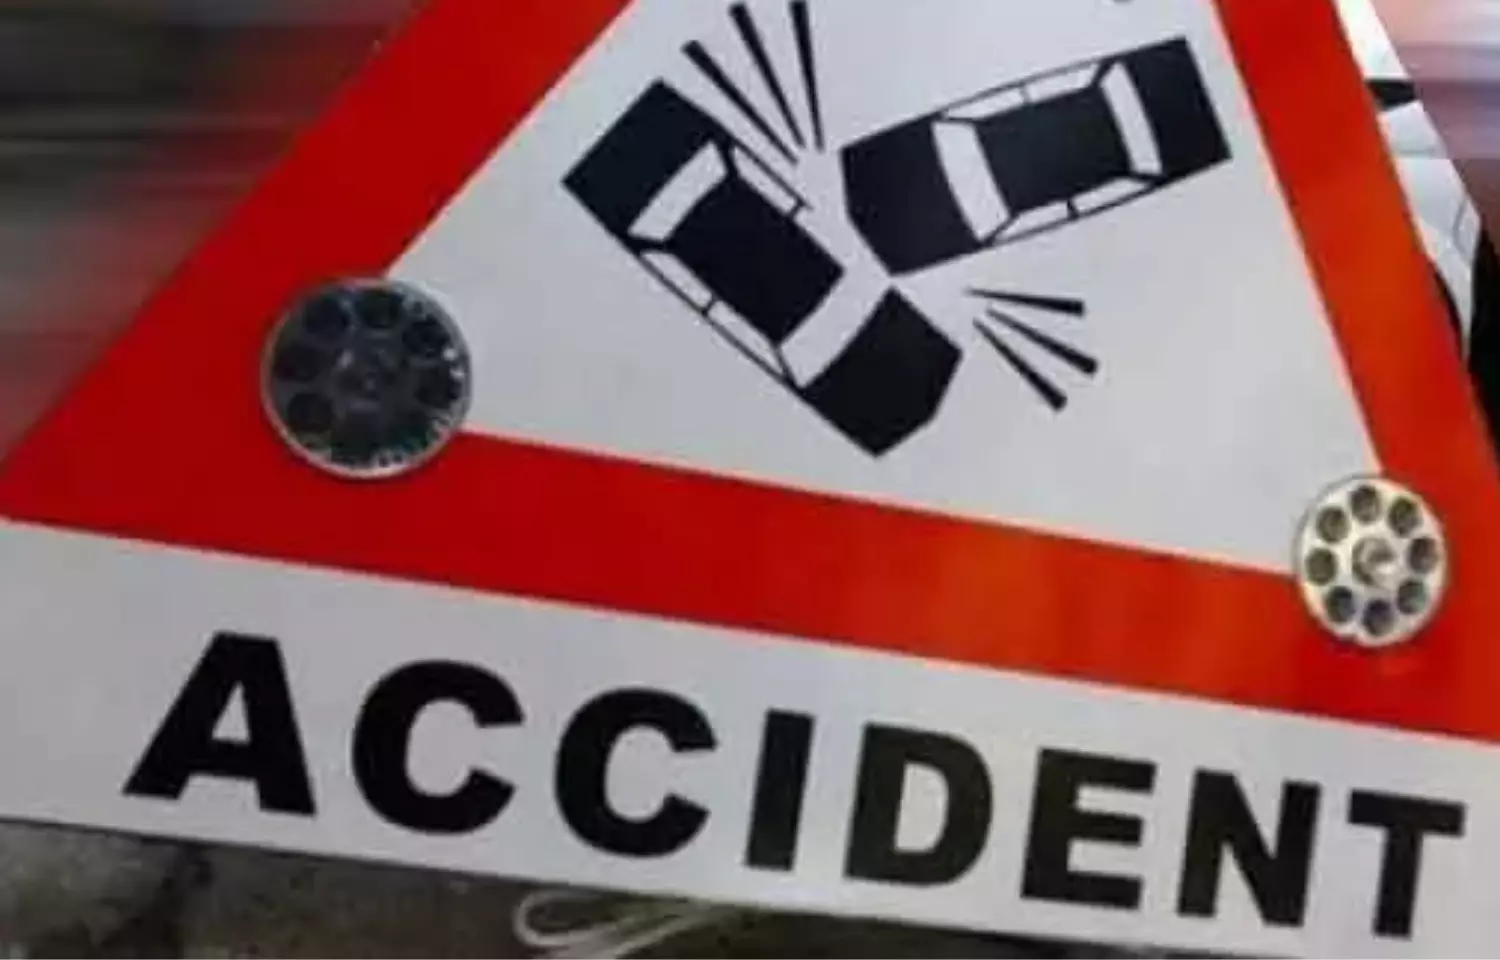 7 MBBS students killed in road accident, PM Modi announces Rs 2 lakh ex gratia each